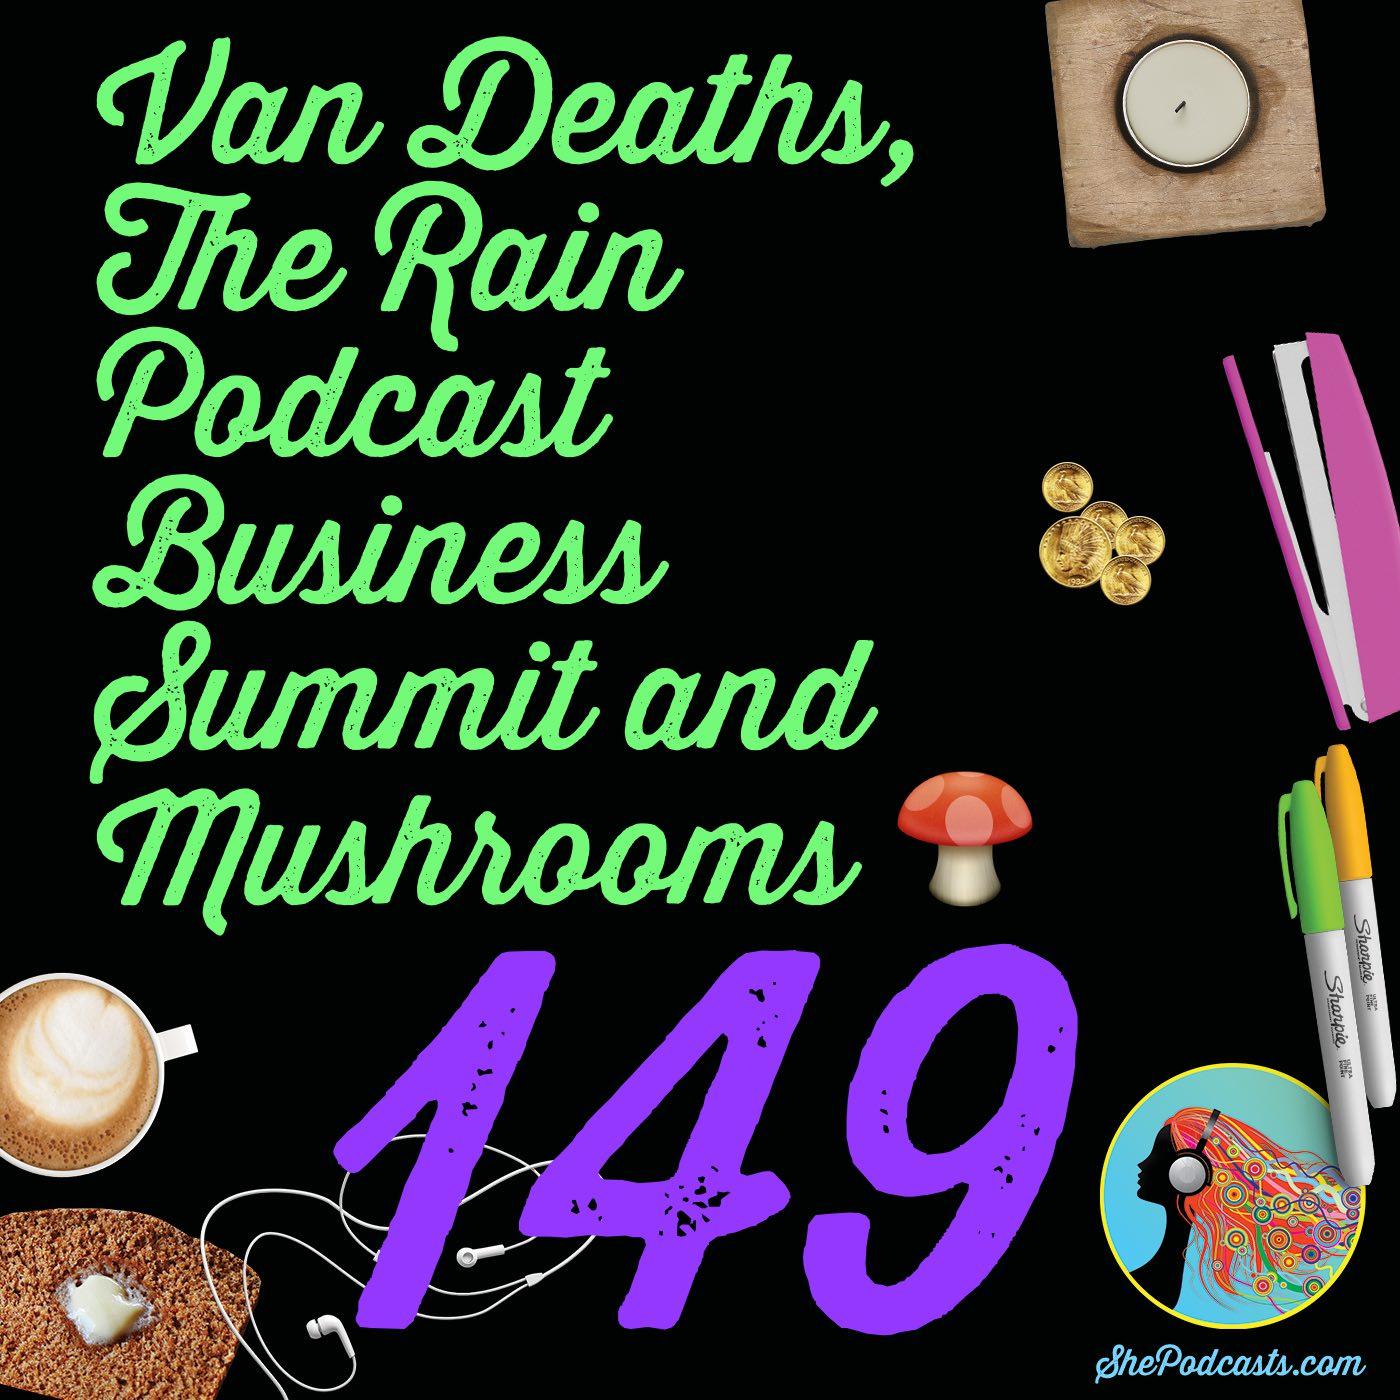 149 Van Deaths The RAIN Podcast Business Summit and Mushrooms